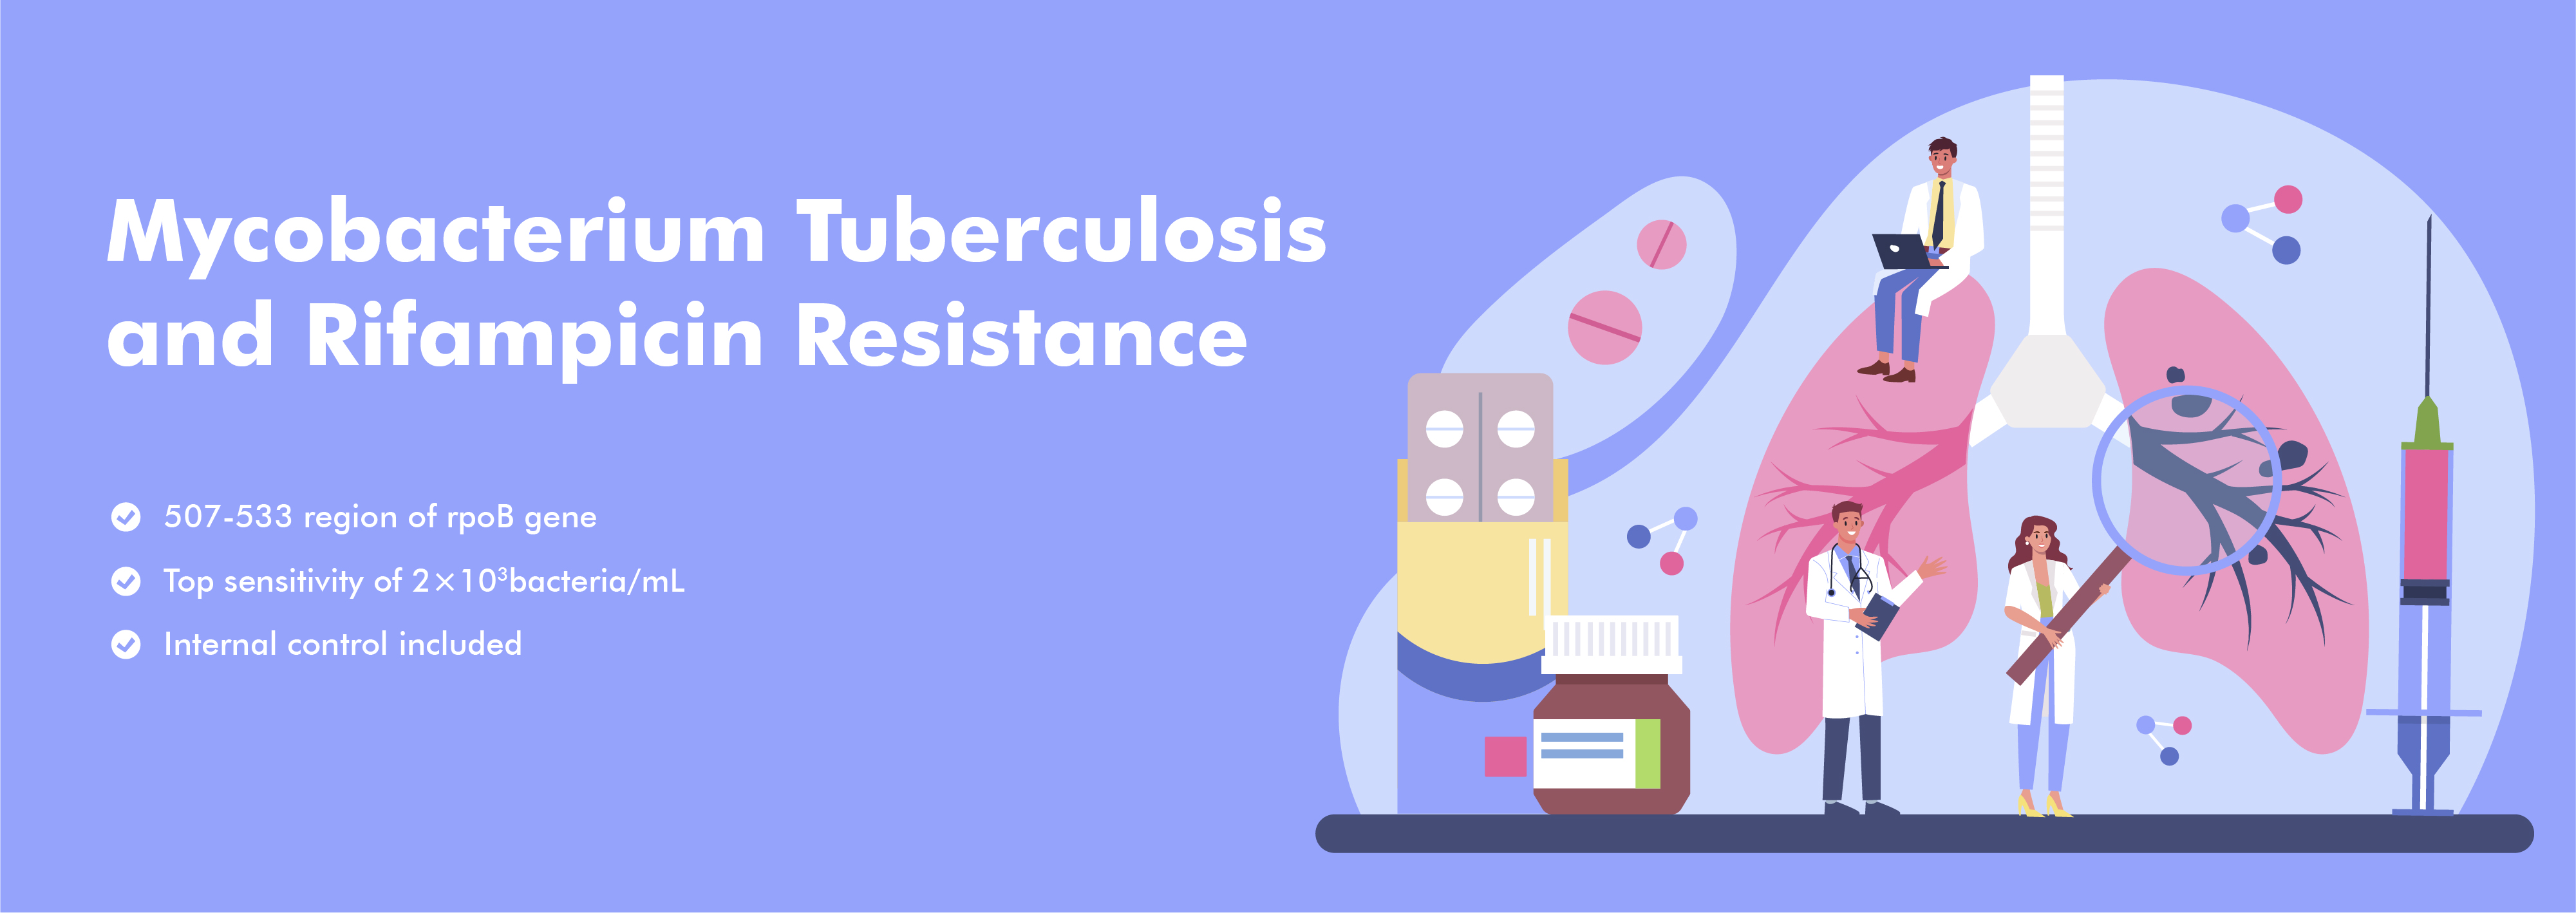 Otpornost na nukleinsku kiselinu i rifampicin Mycobacterium Tuberculosis